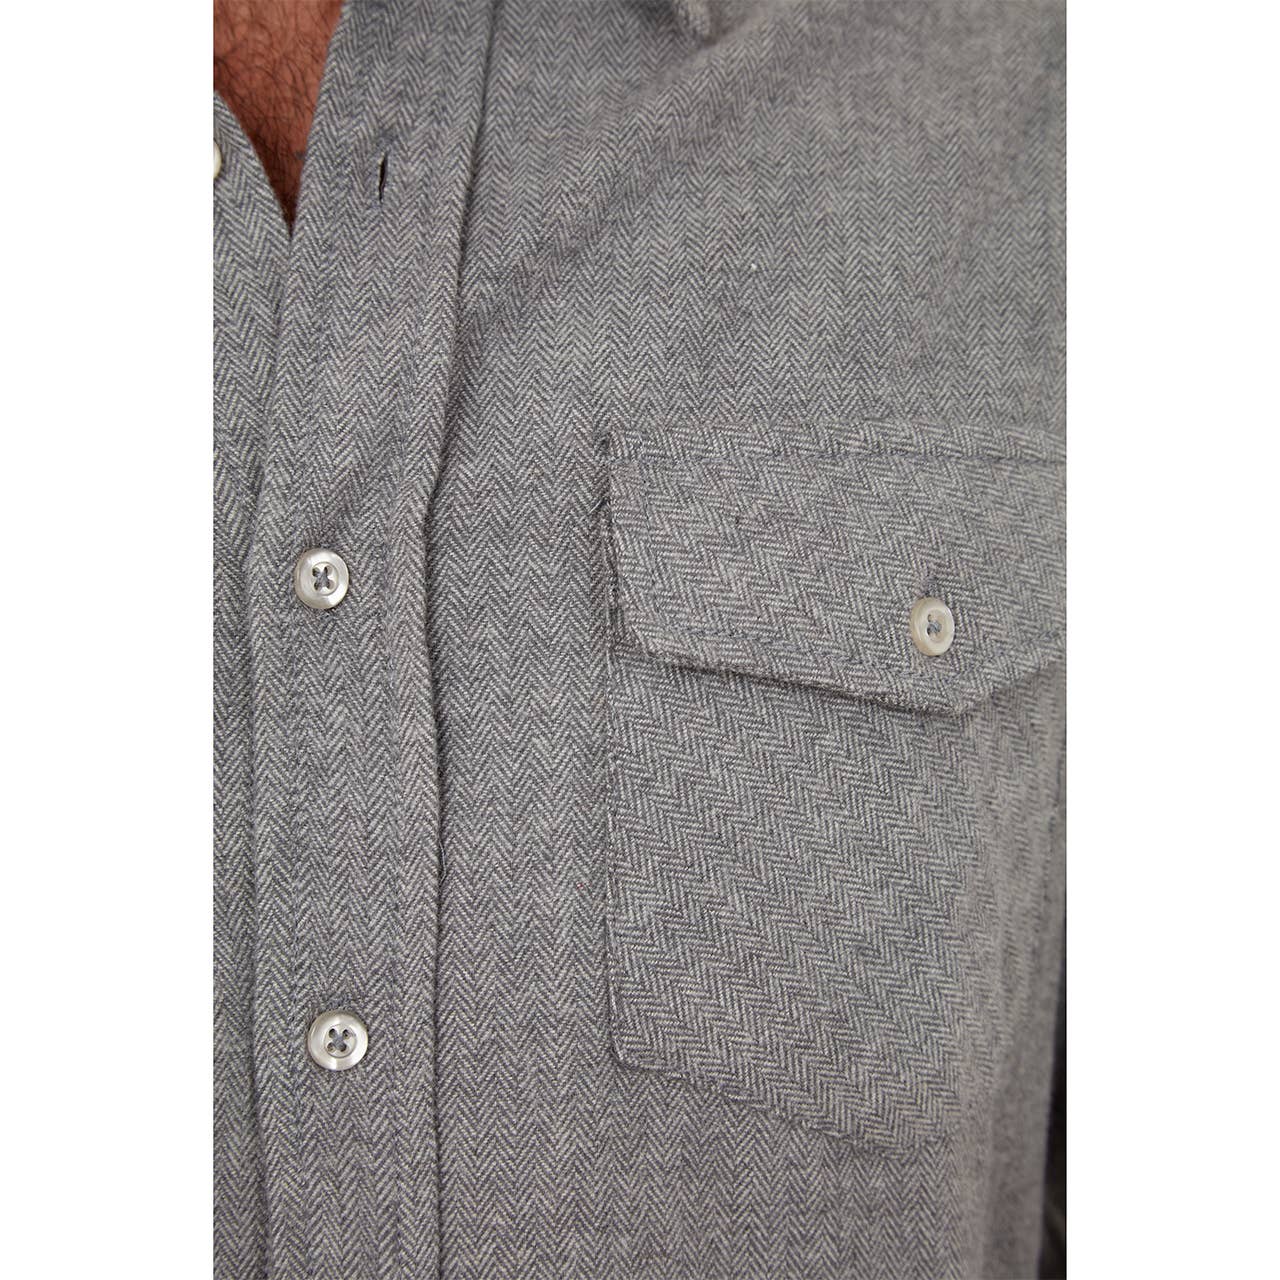 Neil Flannel Herringbone Shirt - Last One Left* size Medium